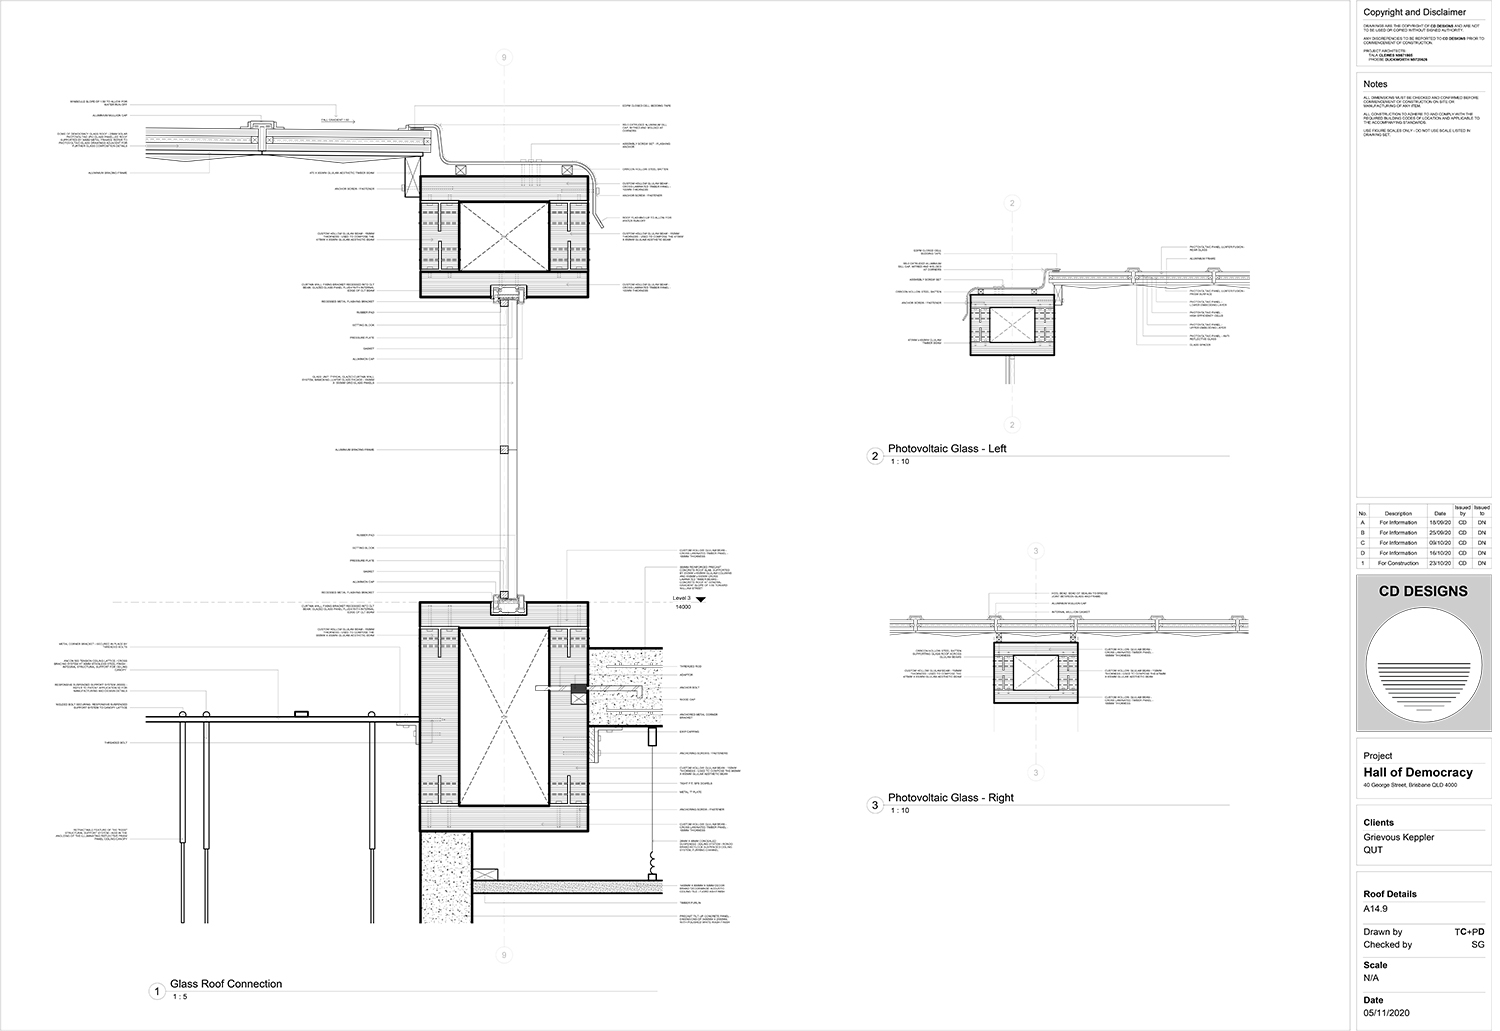 Technical documentation detail - roof details.  